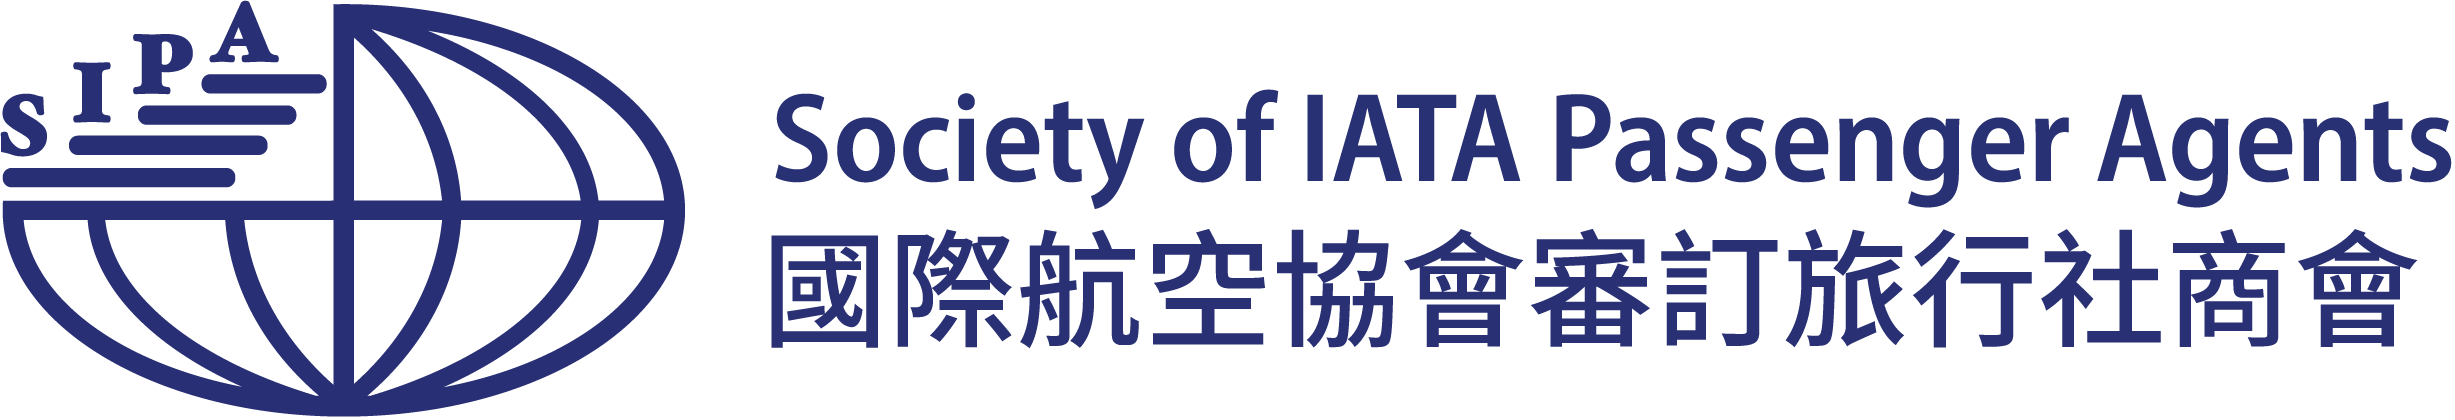 Society of IATA Passenger Agents Ltd